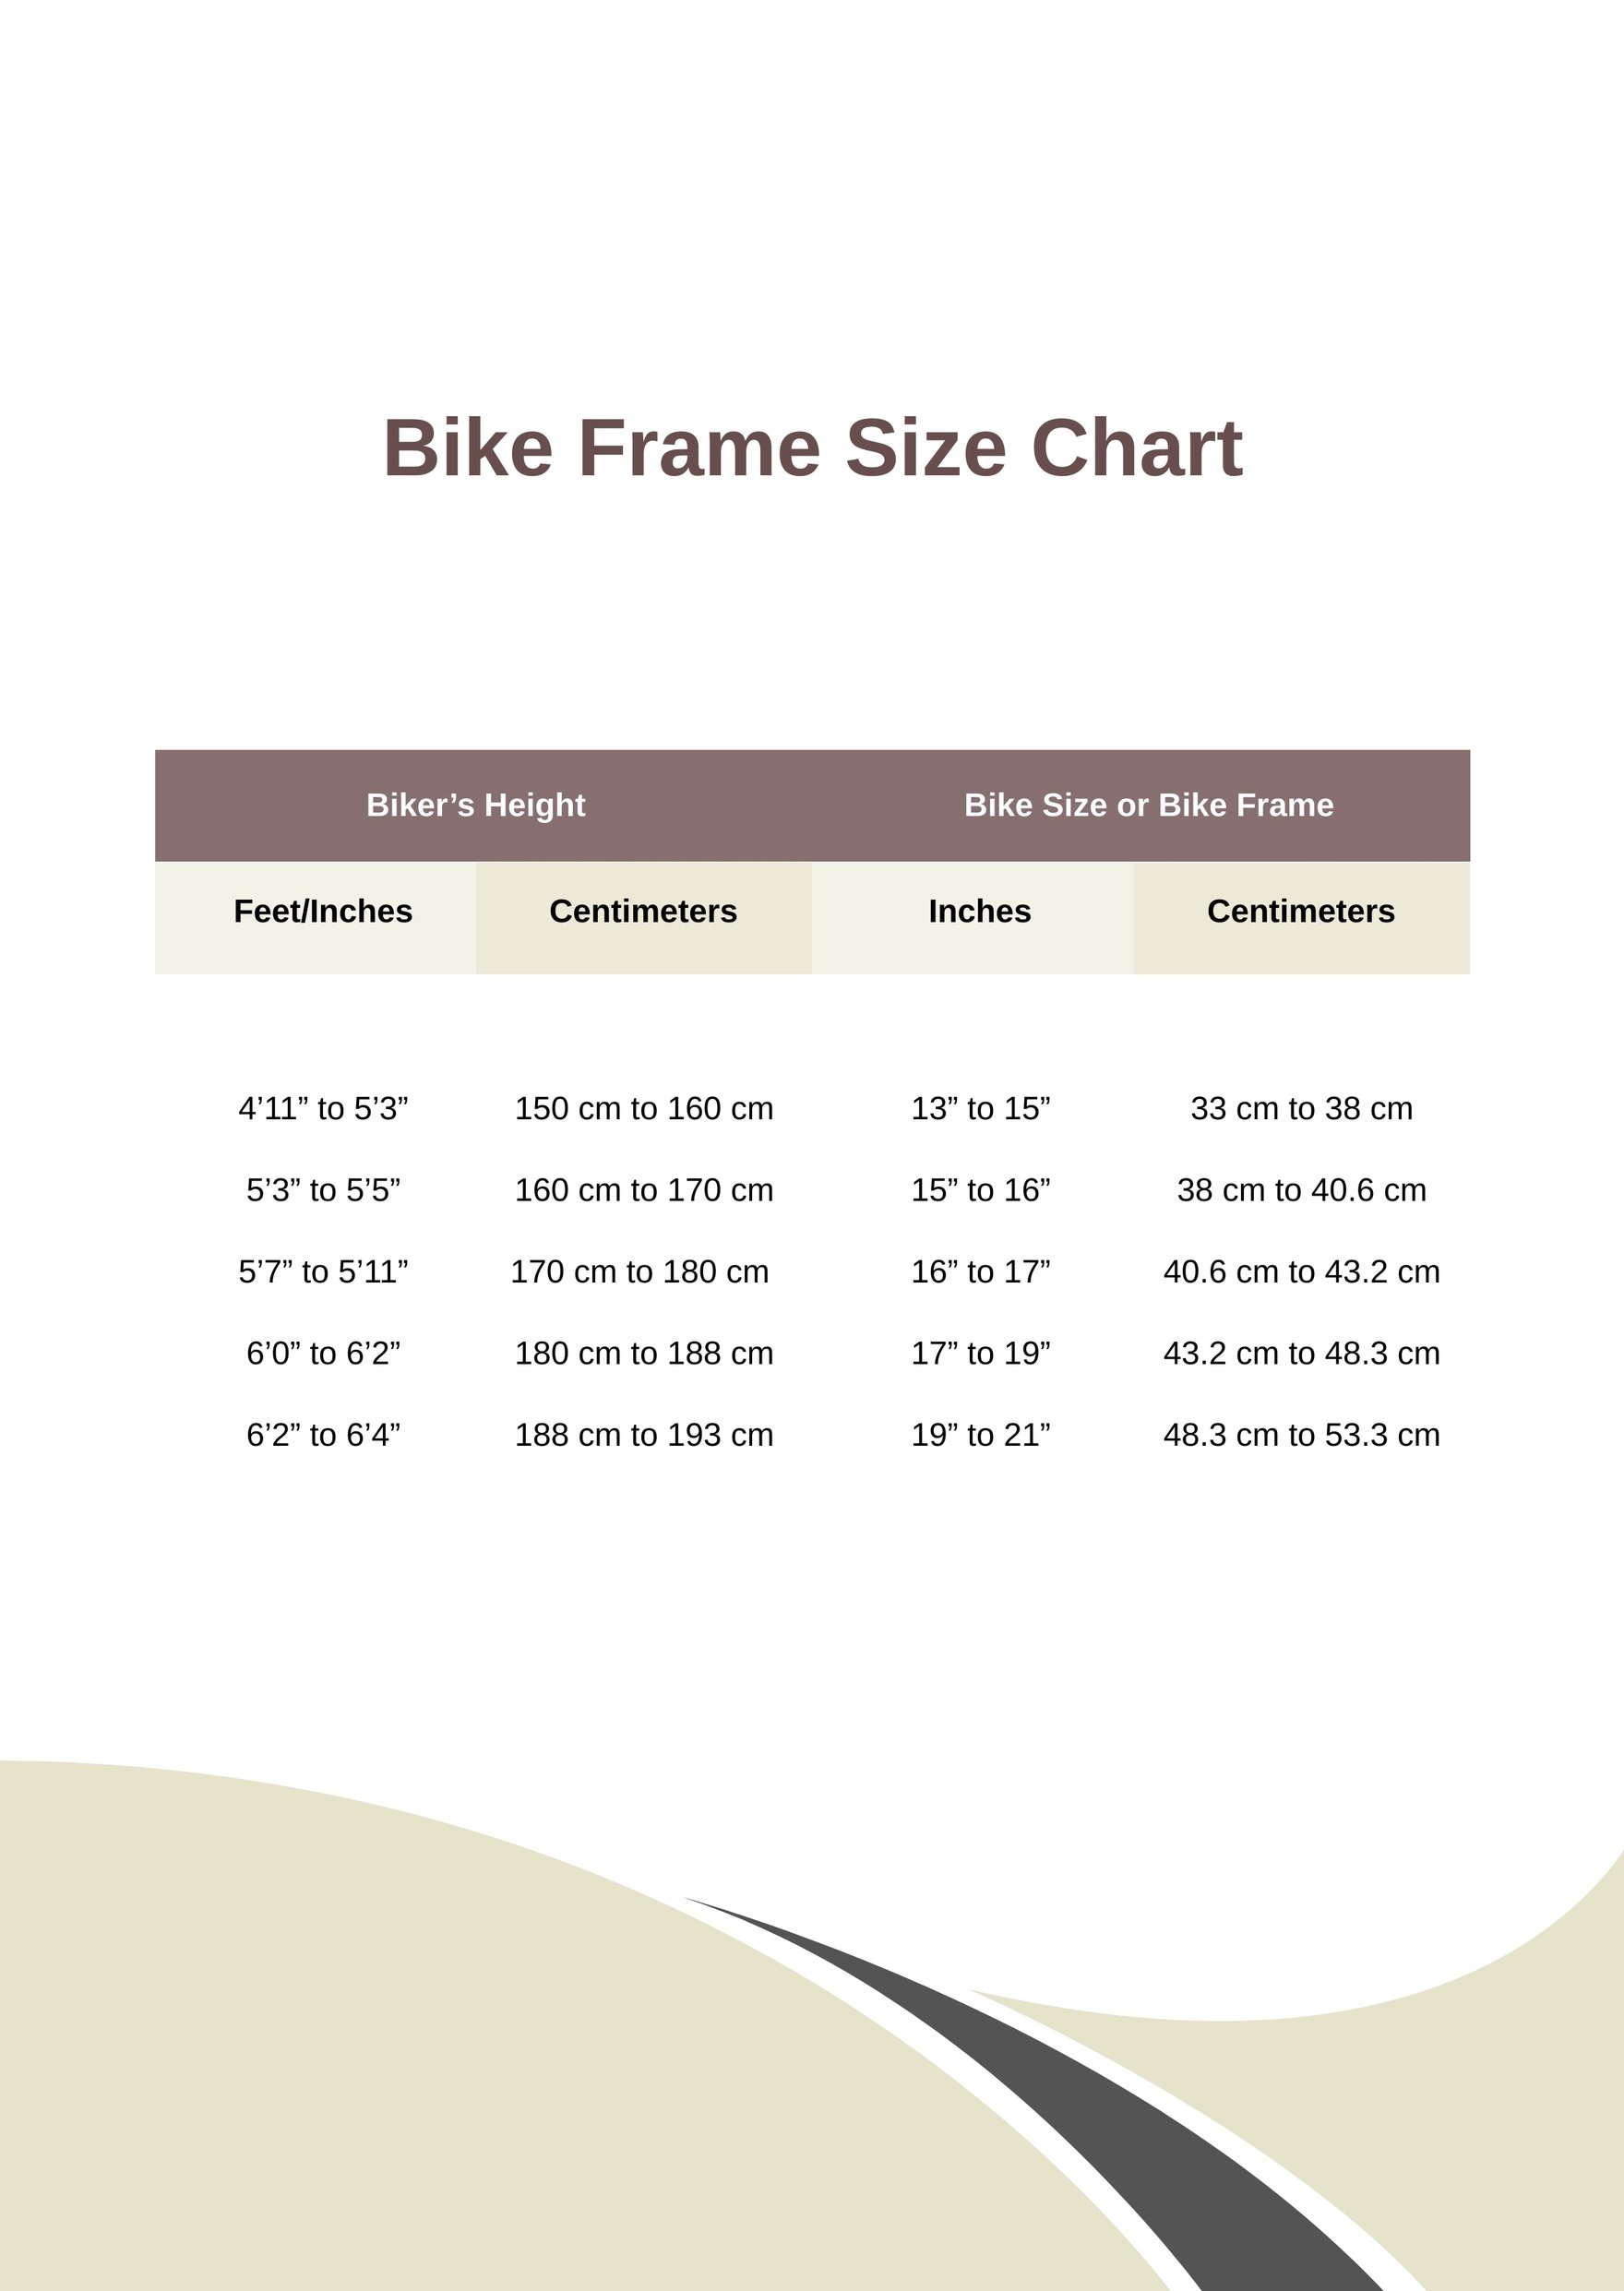 Free Bike Size Comparison Chart - Download in PDF